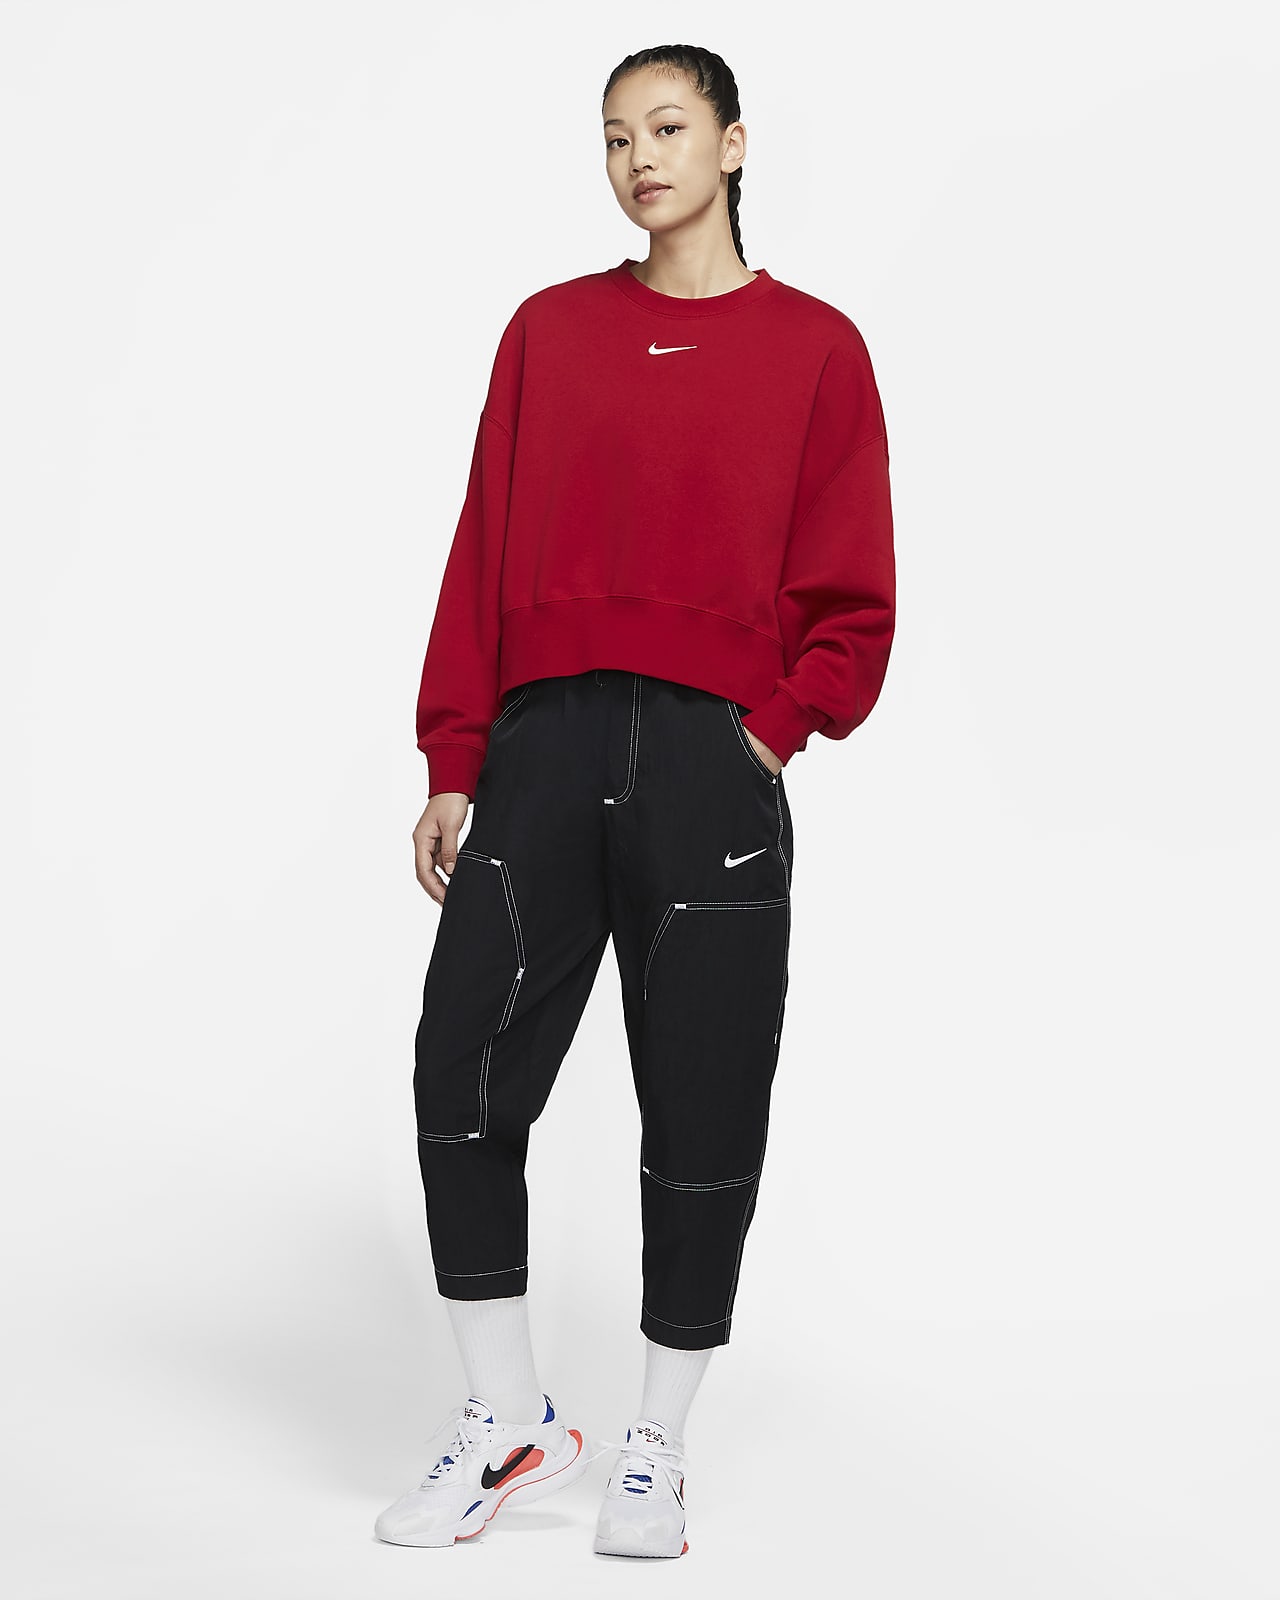 Nike Women's Dry Slim Woven Pant 884932